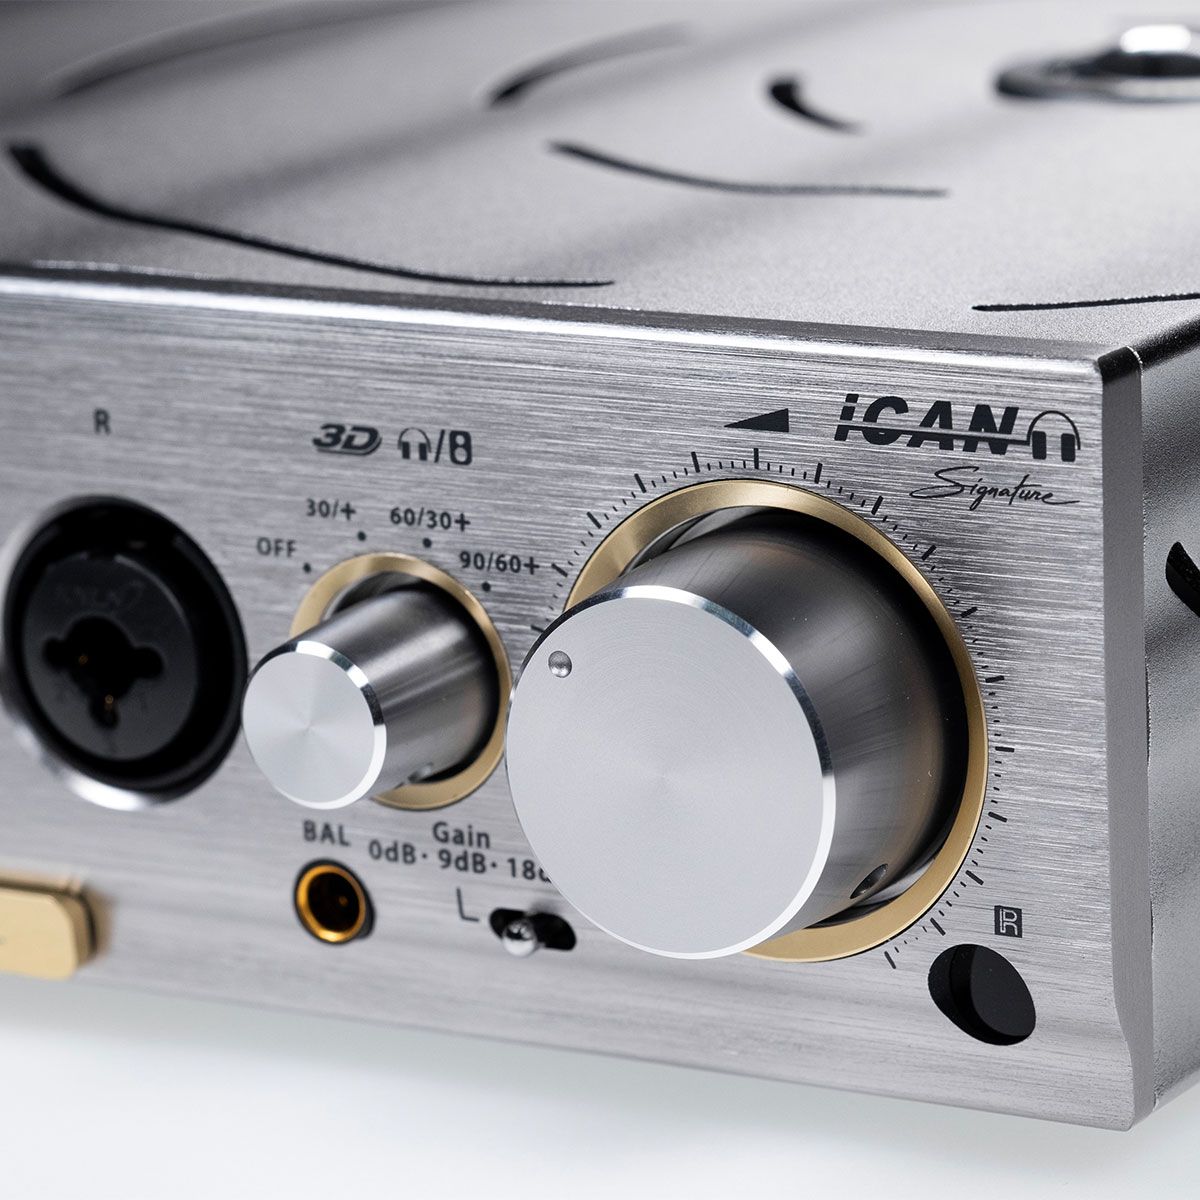 iFi iCAN Pro Signature Amplifier close up of dials